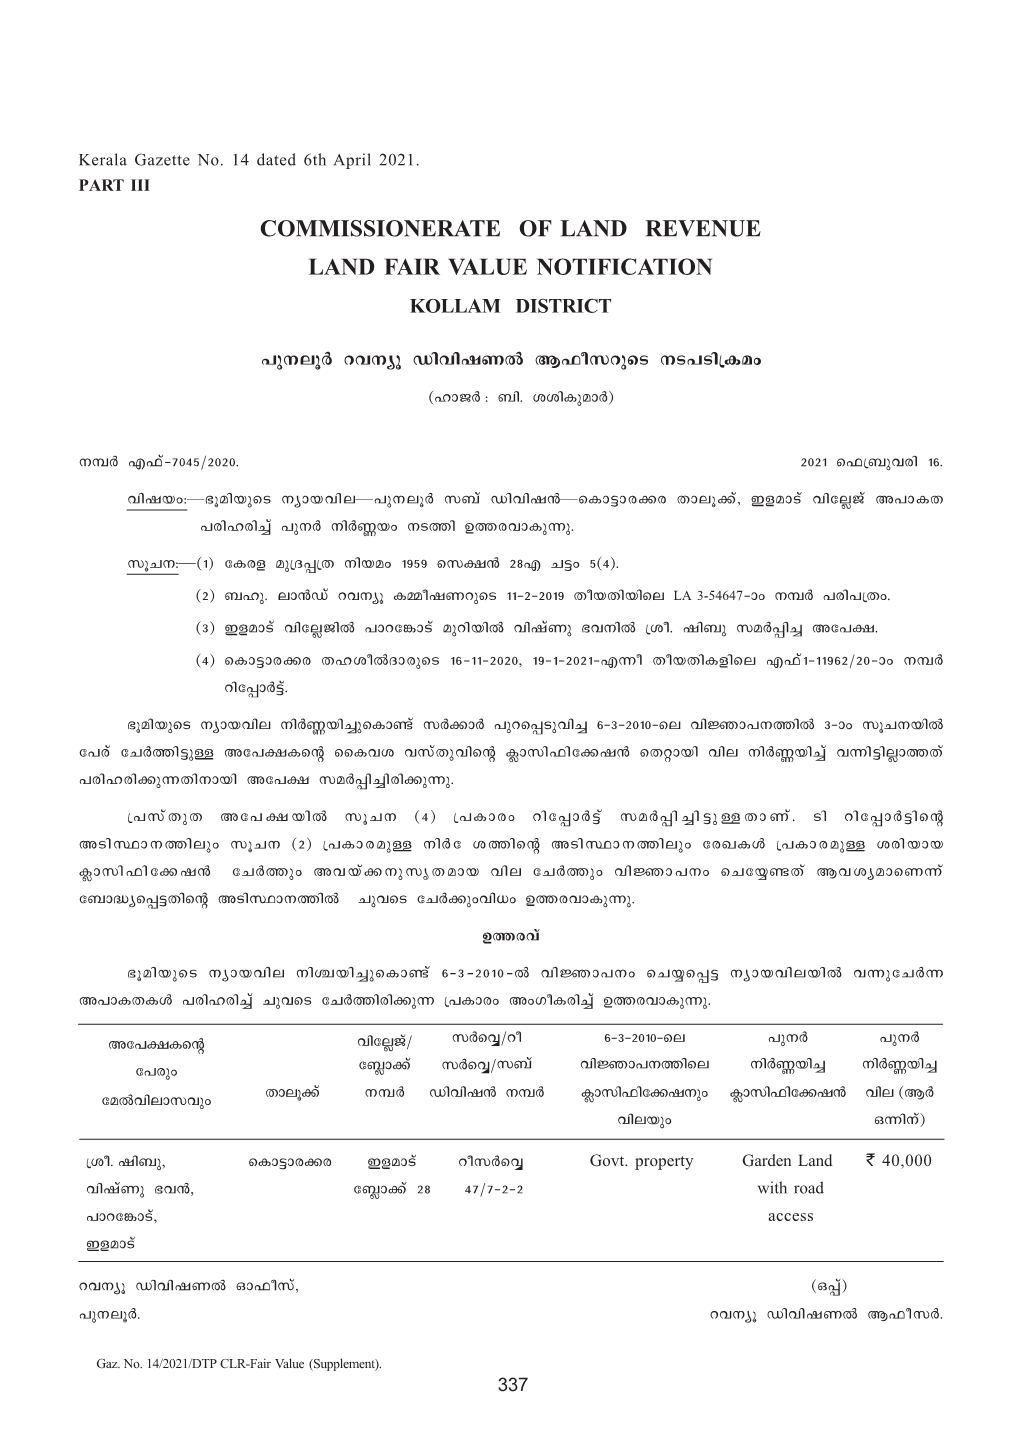 Commissionerate of Land Revenue Land Fair Value Notification Kollam District